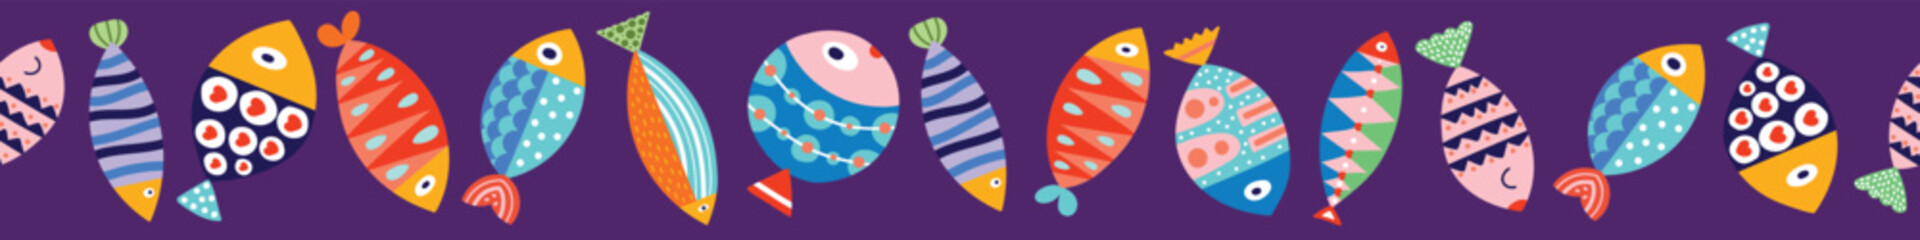 Vector seamless horizontal border with fish. Cute kids
illustration. - 777373504